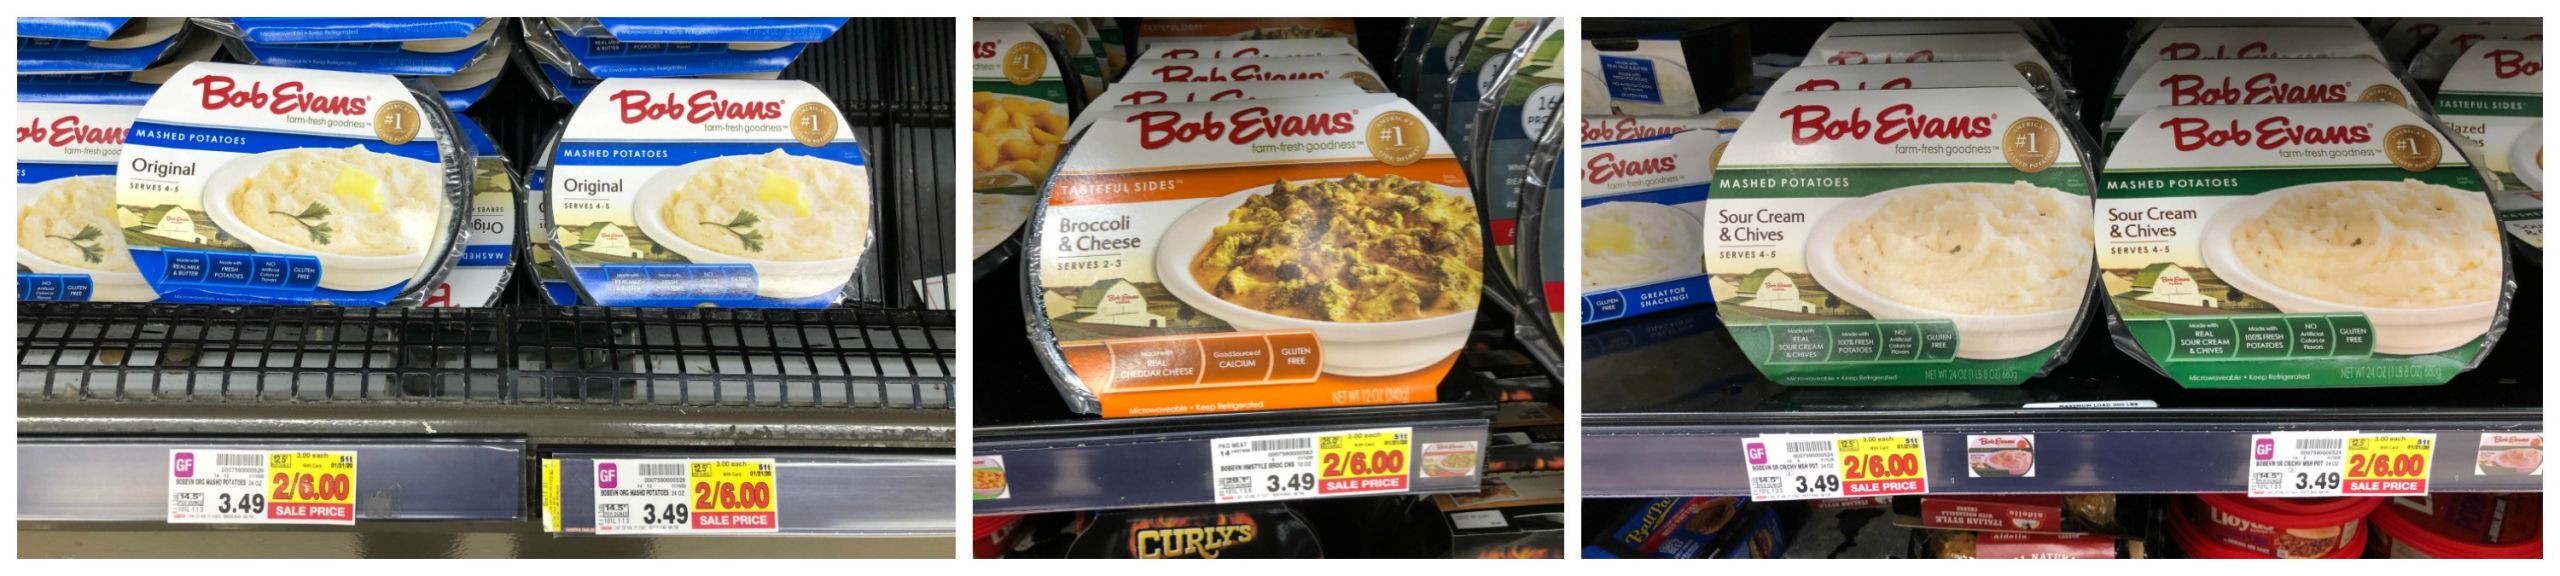 Bob Evans Refrigerated Side Dishes
 Get Bob Evans Side Dishes for ONLY $2 50 each at Kroger